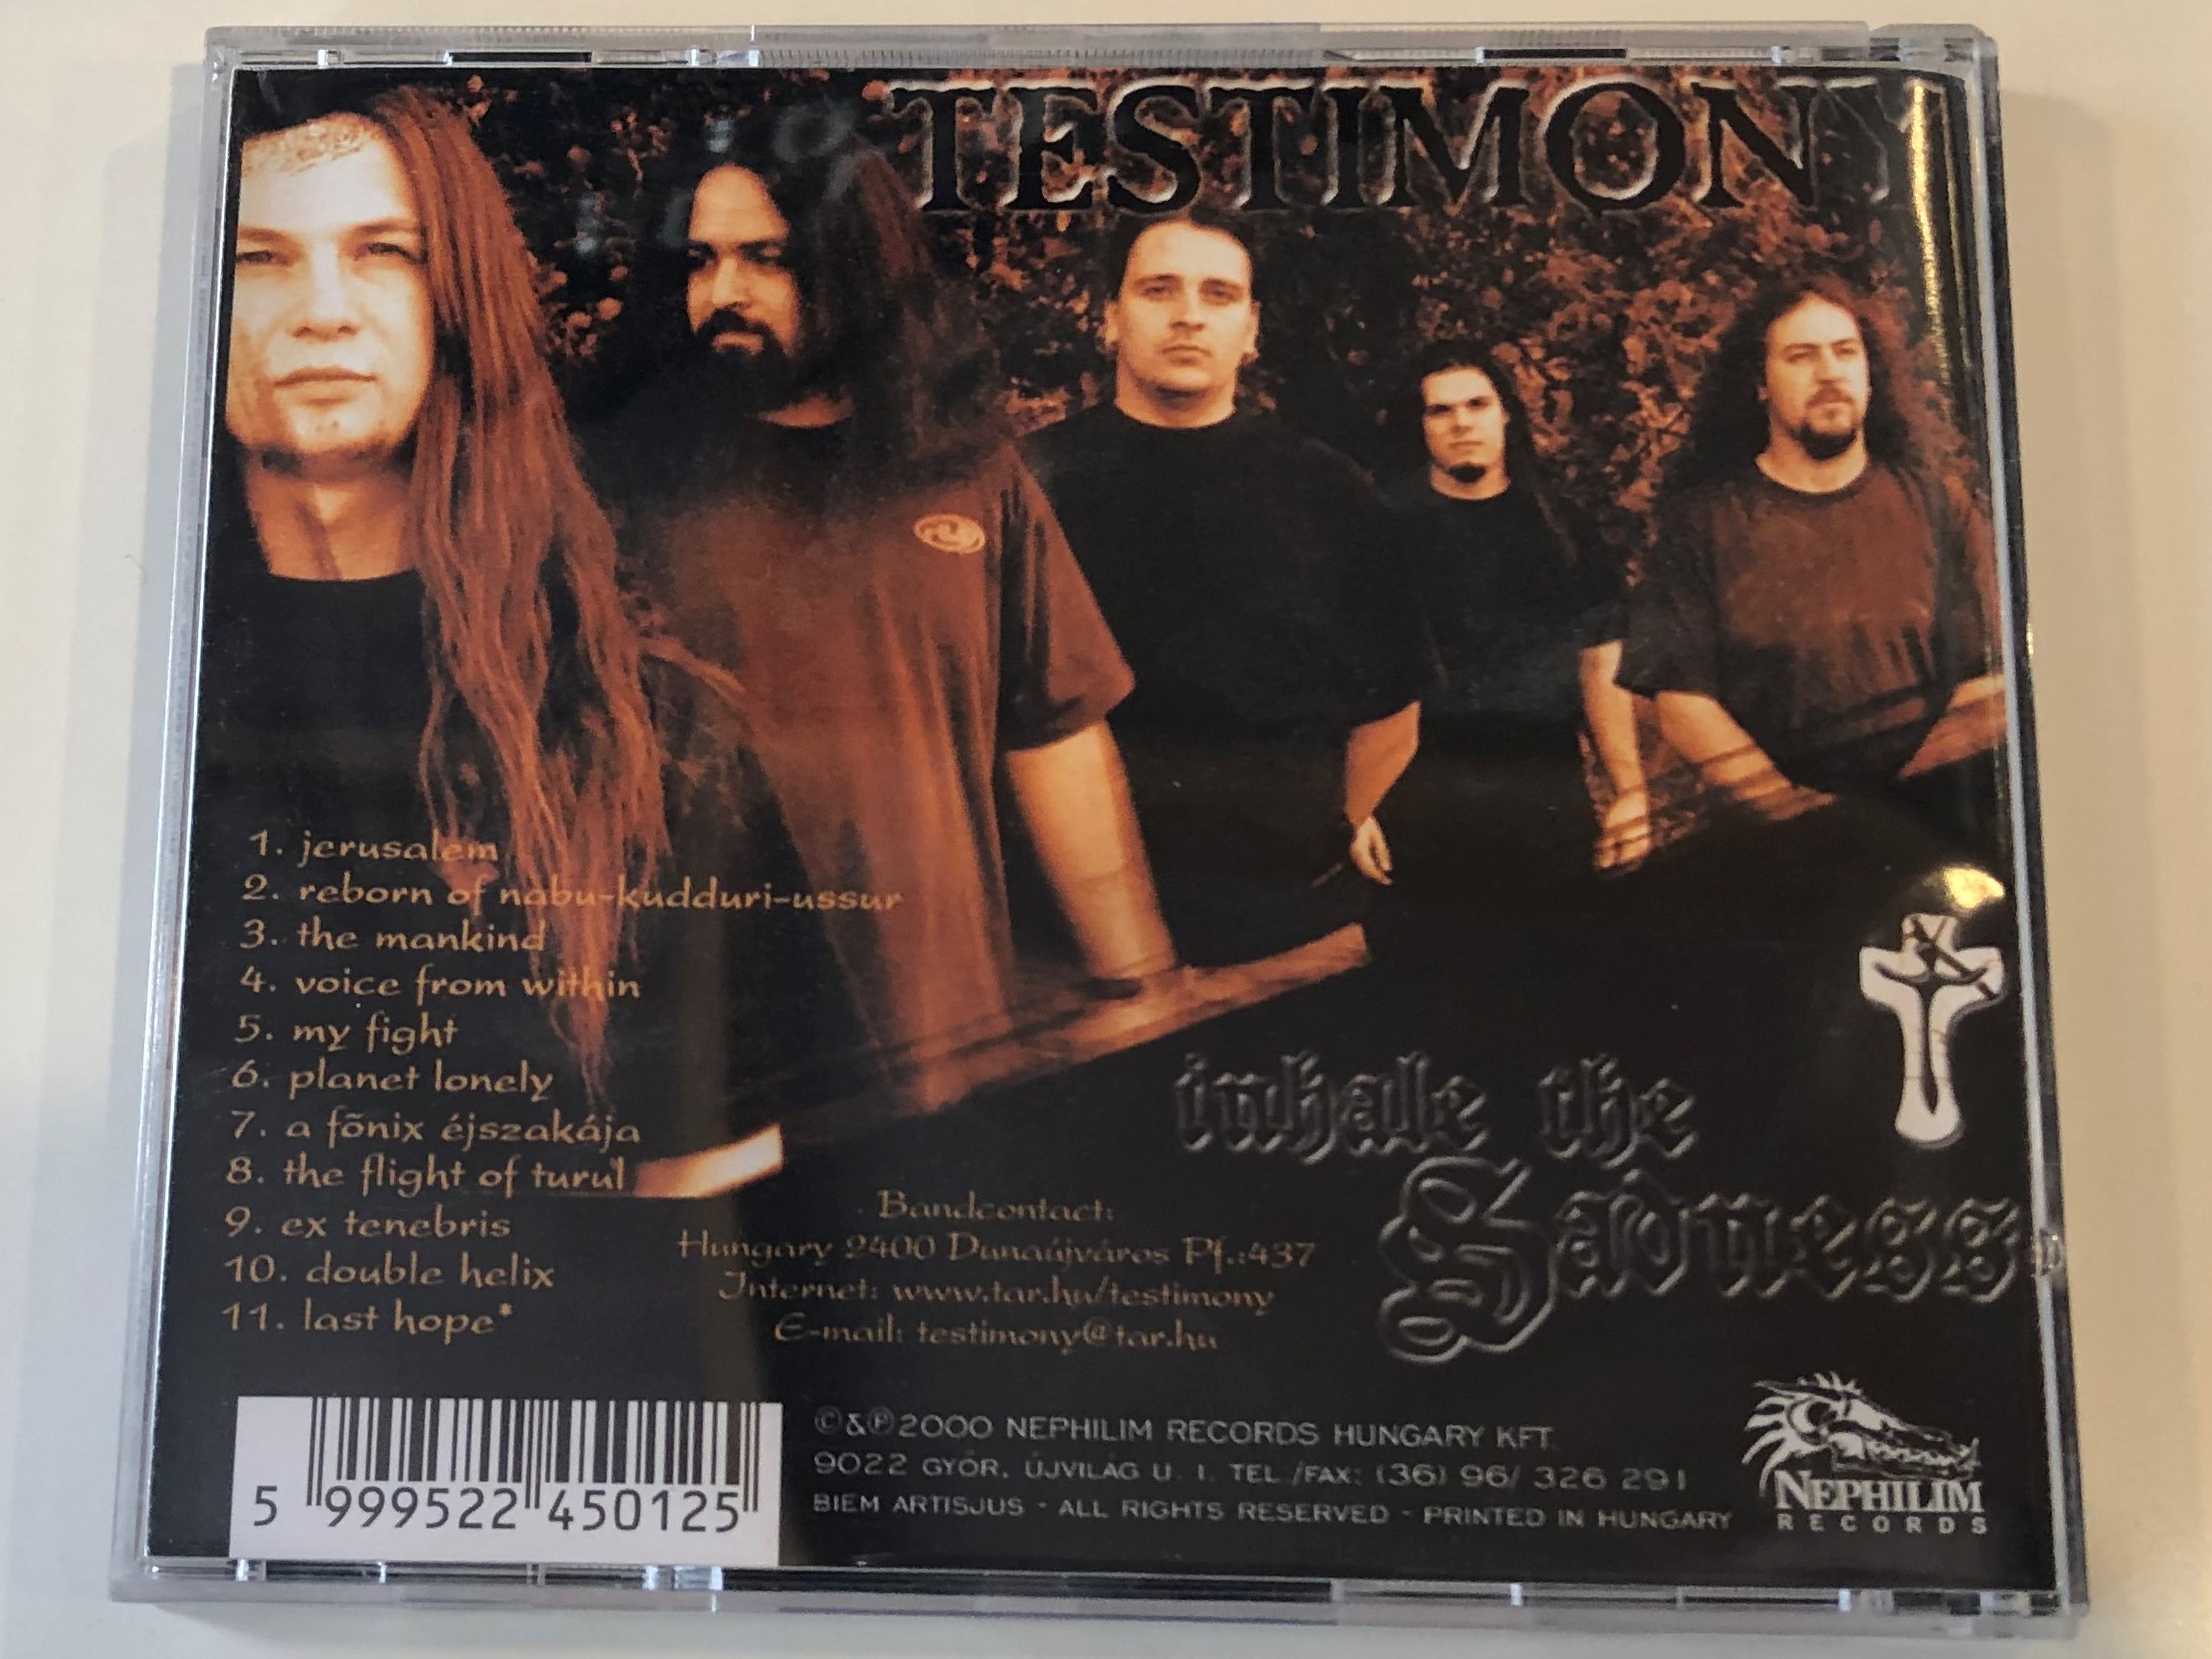 testimony-inhale-the-sadness-nephilim-records-audio-cd-2000-nepcd012-4-.jpg